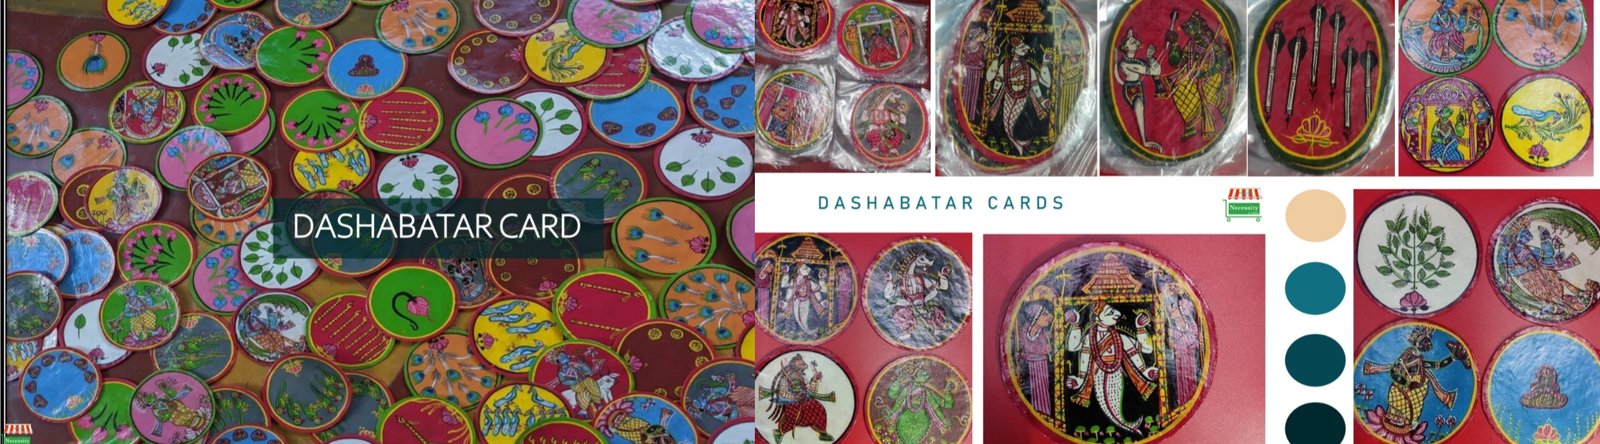 Dasabatar Card